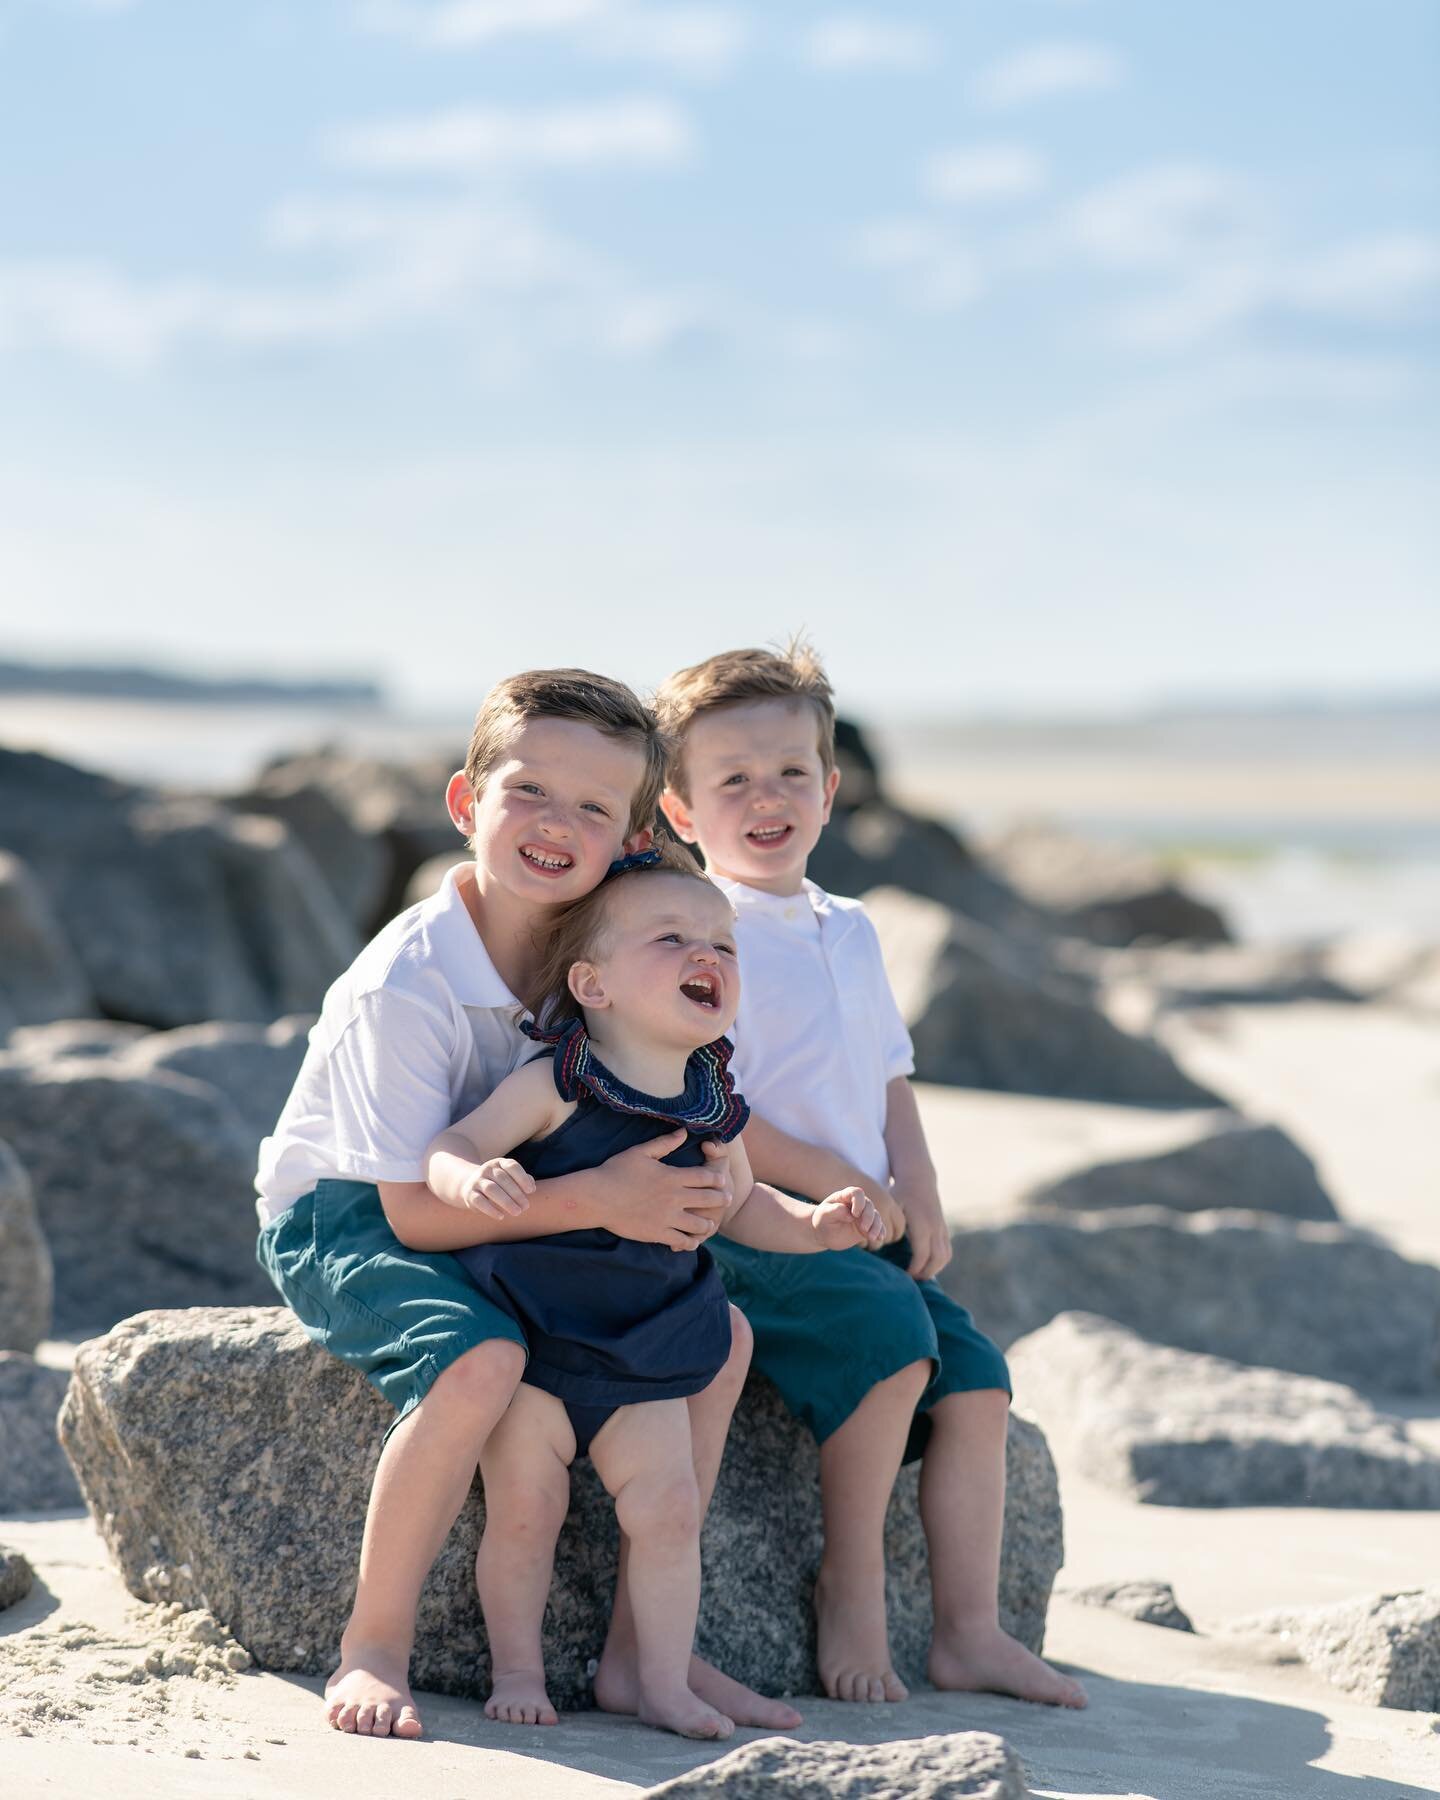 Good job kiddos! #siblinglove #allsmiles #happyfamily #hiltonheadisland #dunes #beach #sunset #hiltonheadphotographer #familyphotography #portraitphotography #beachphotoshoot #beachphotography #beachphotographer #kidphotography #childrenphotography